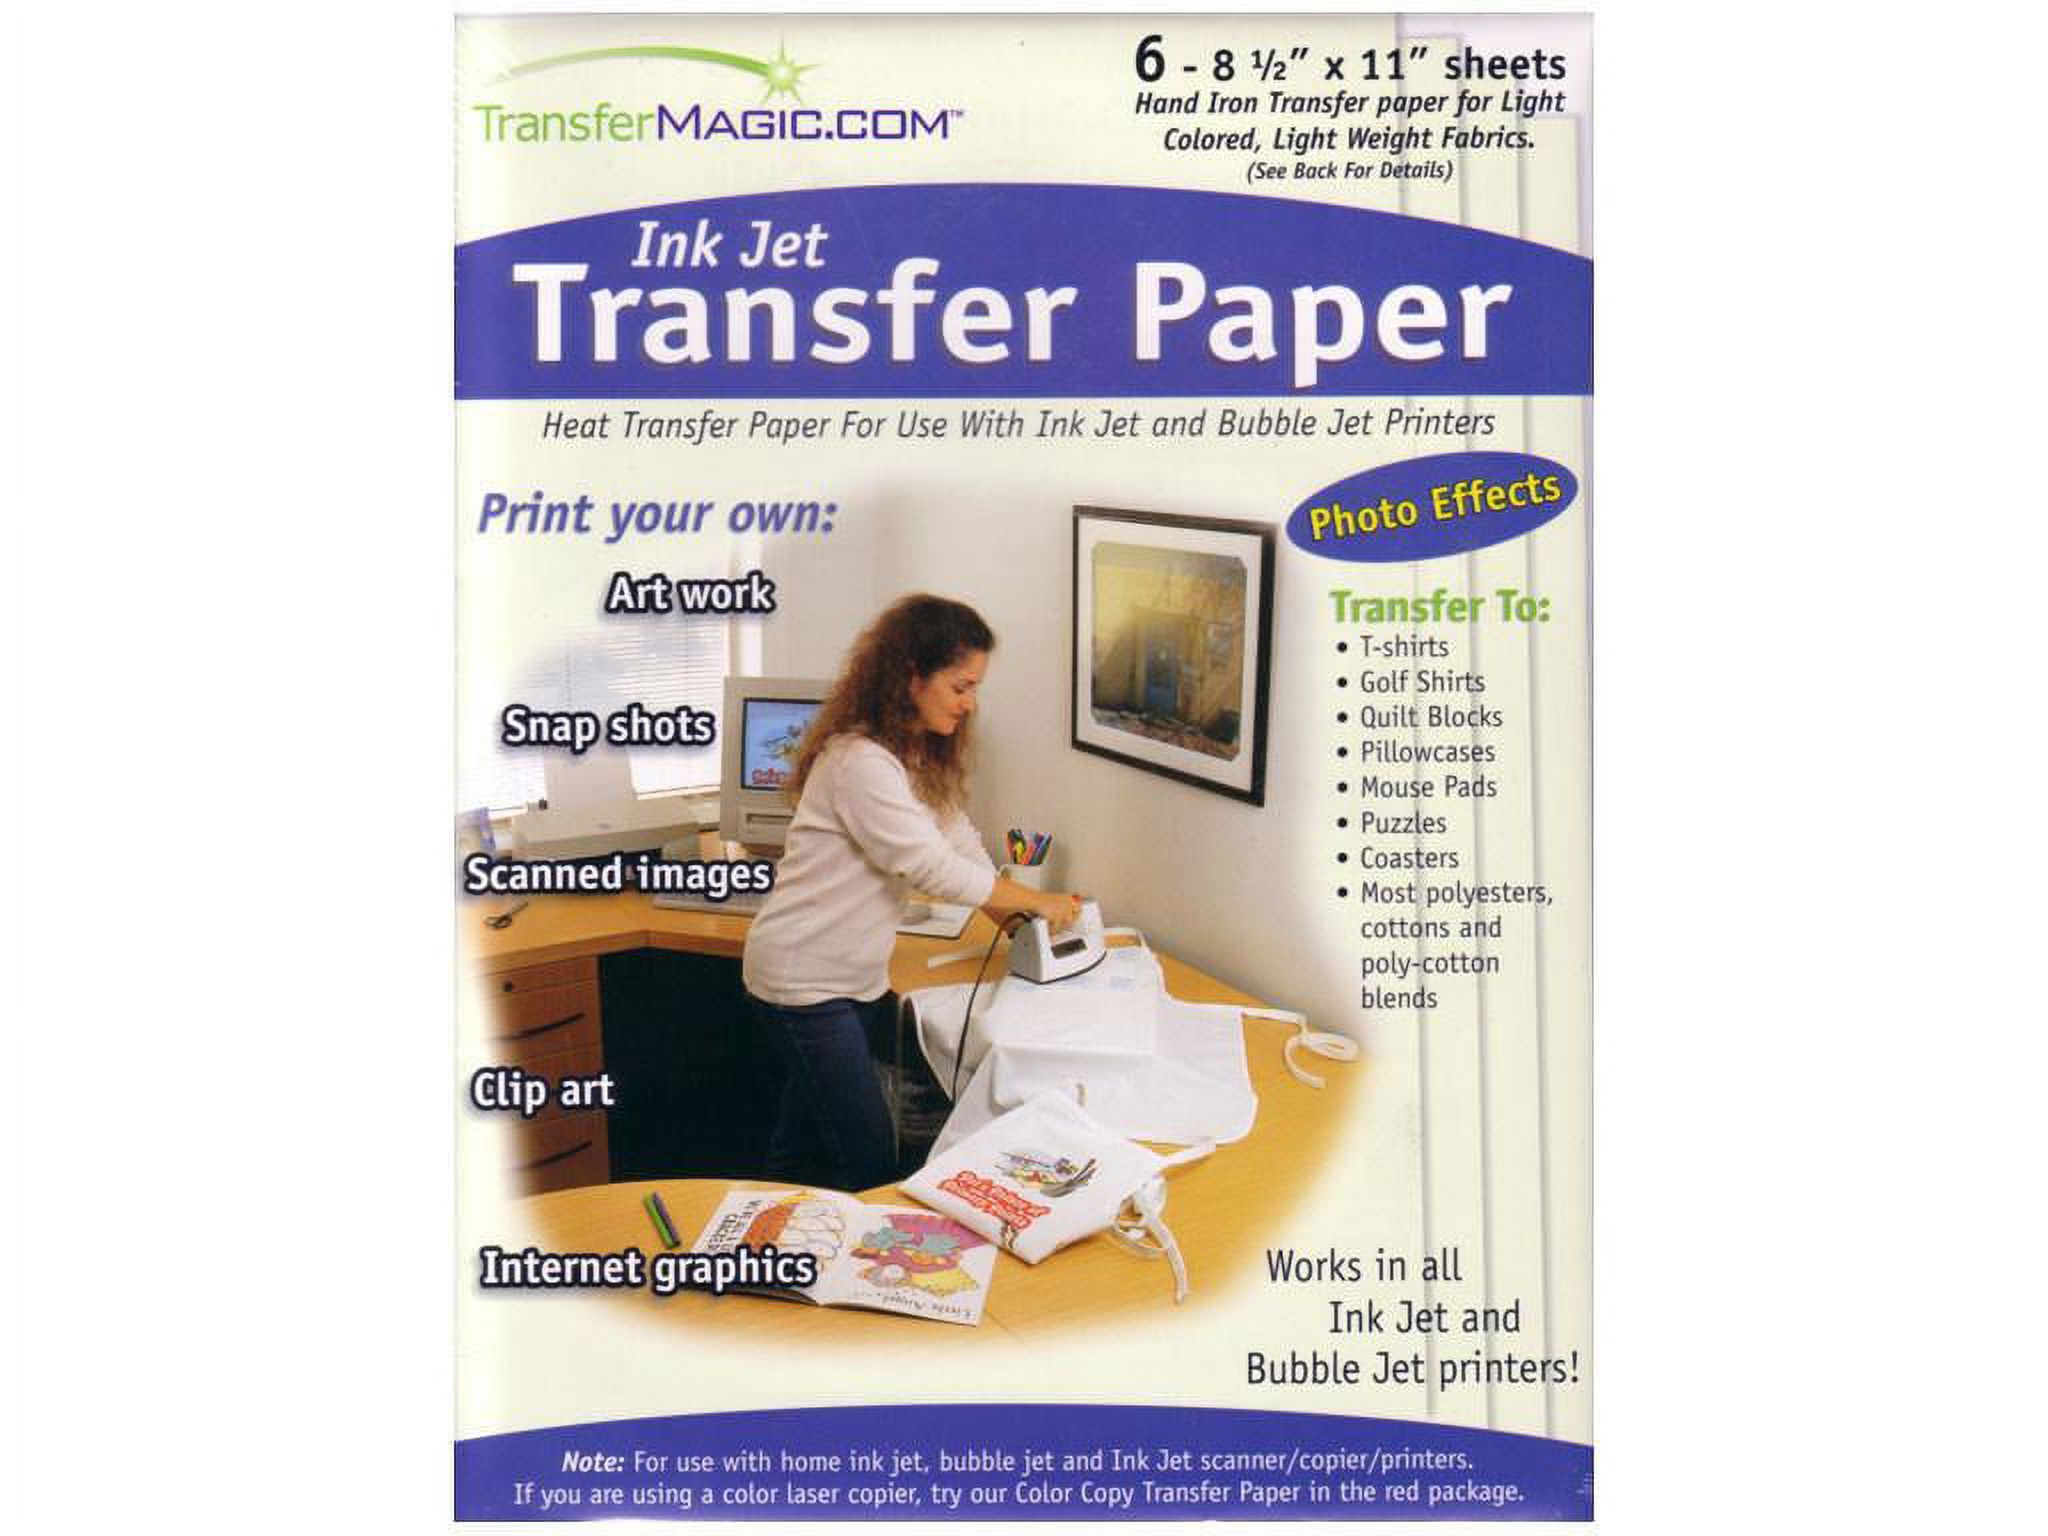 Transfer Magic Ink Jet Transfer Paper 6pc - image 1 of 3